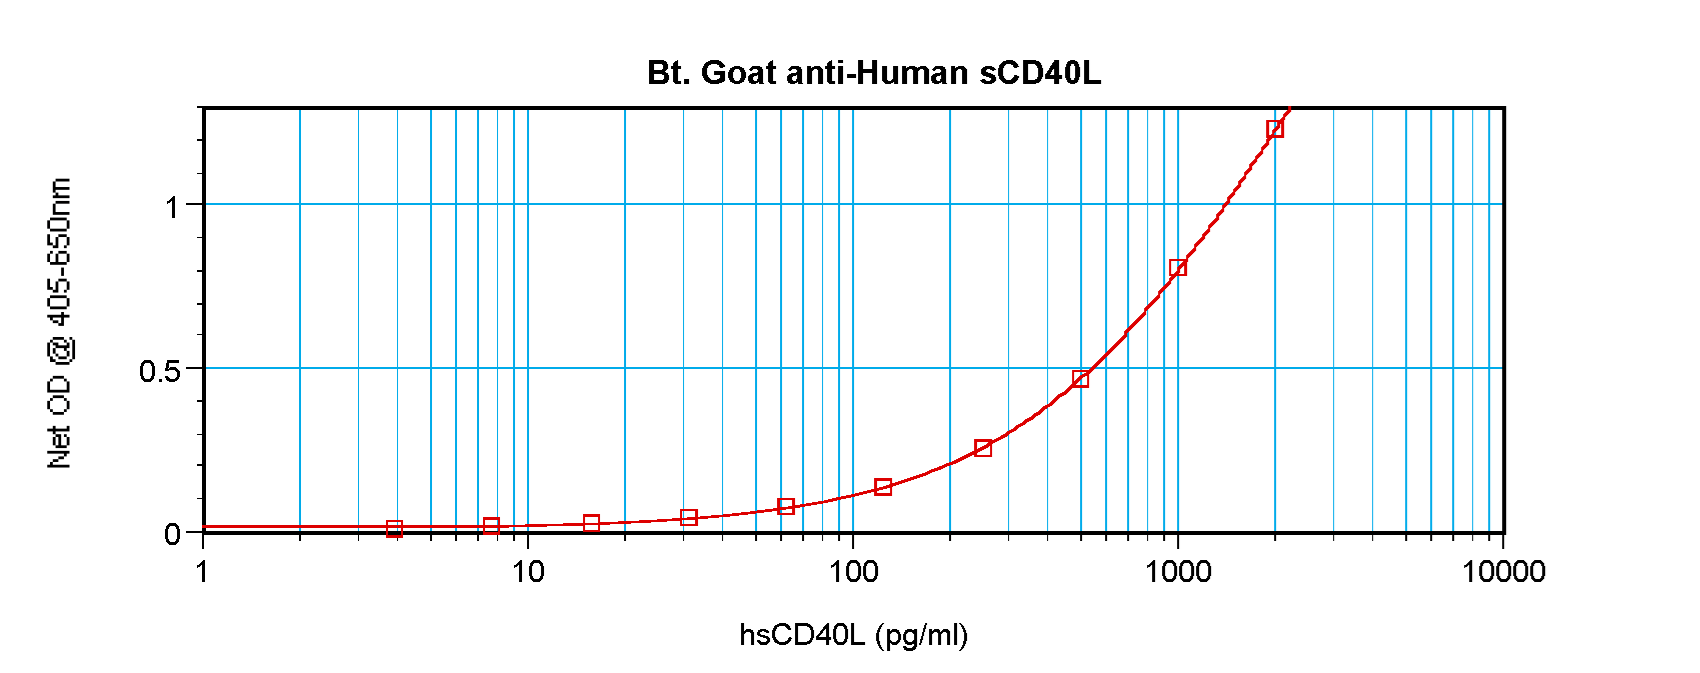 CD40L Antibody - Biotinylated Anti-Human sCD40 Ligand Sandwich ELISA